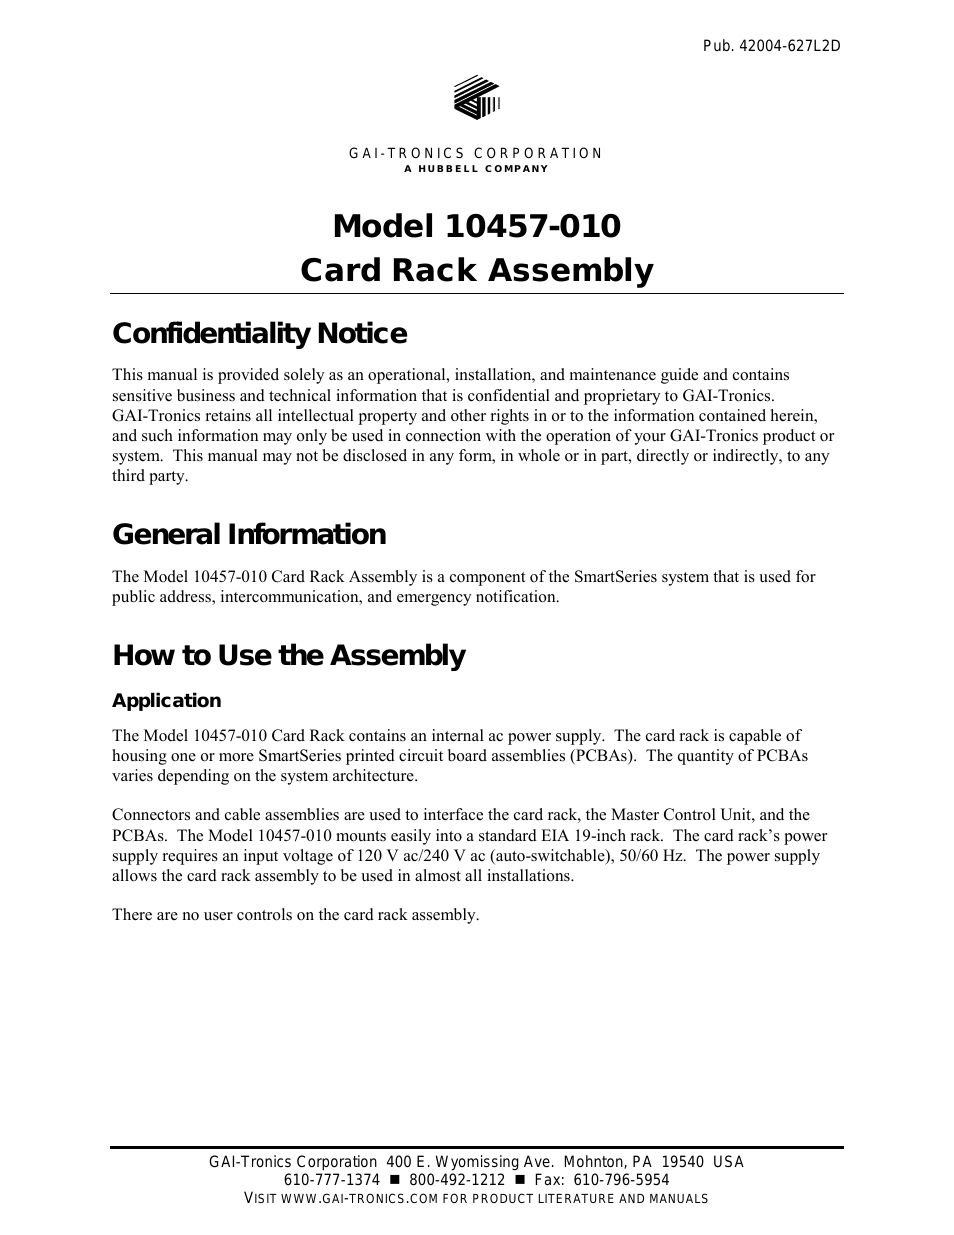 10457-010 Card Rack Assembly